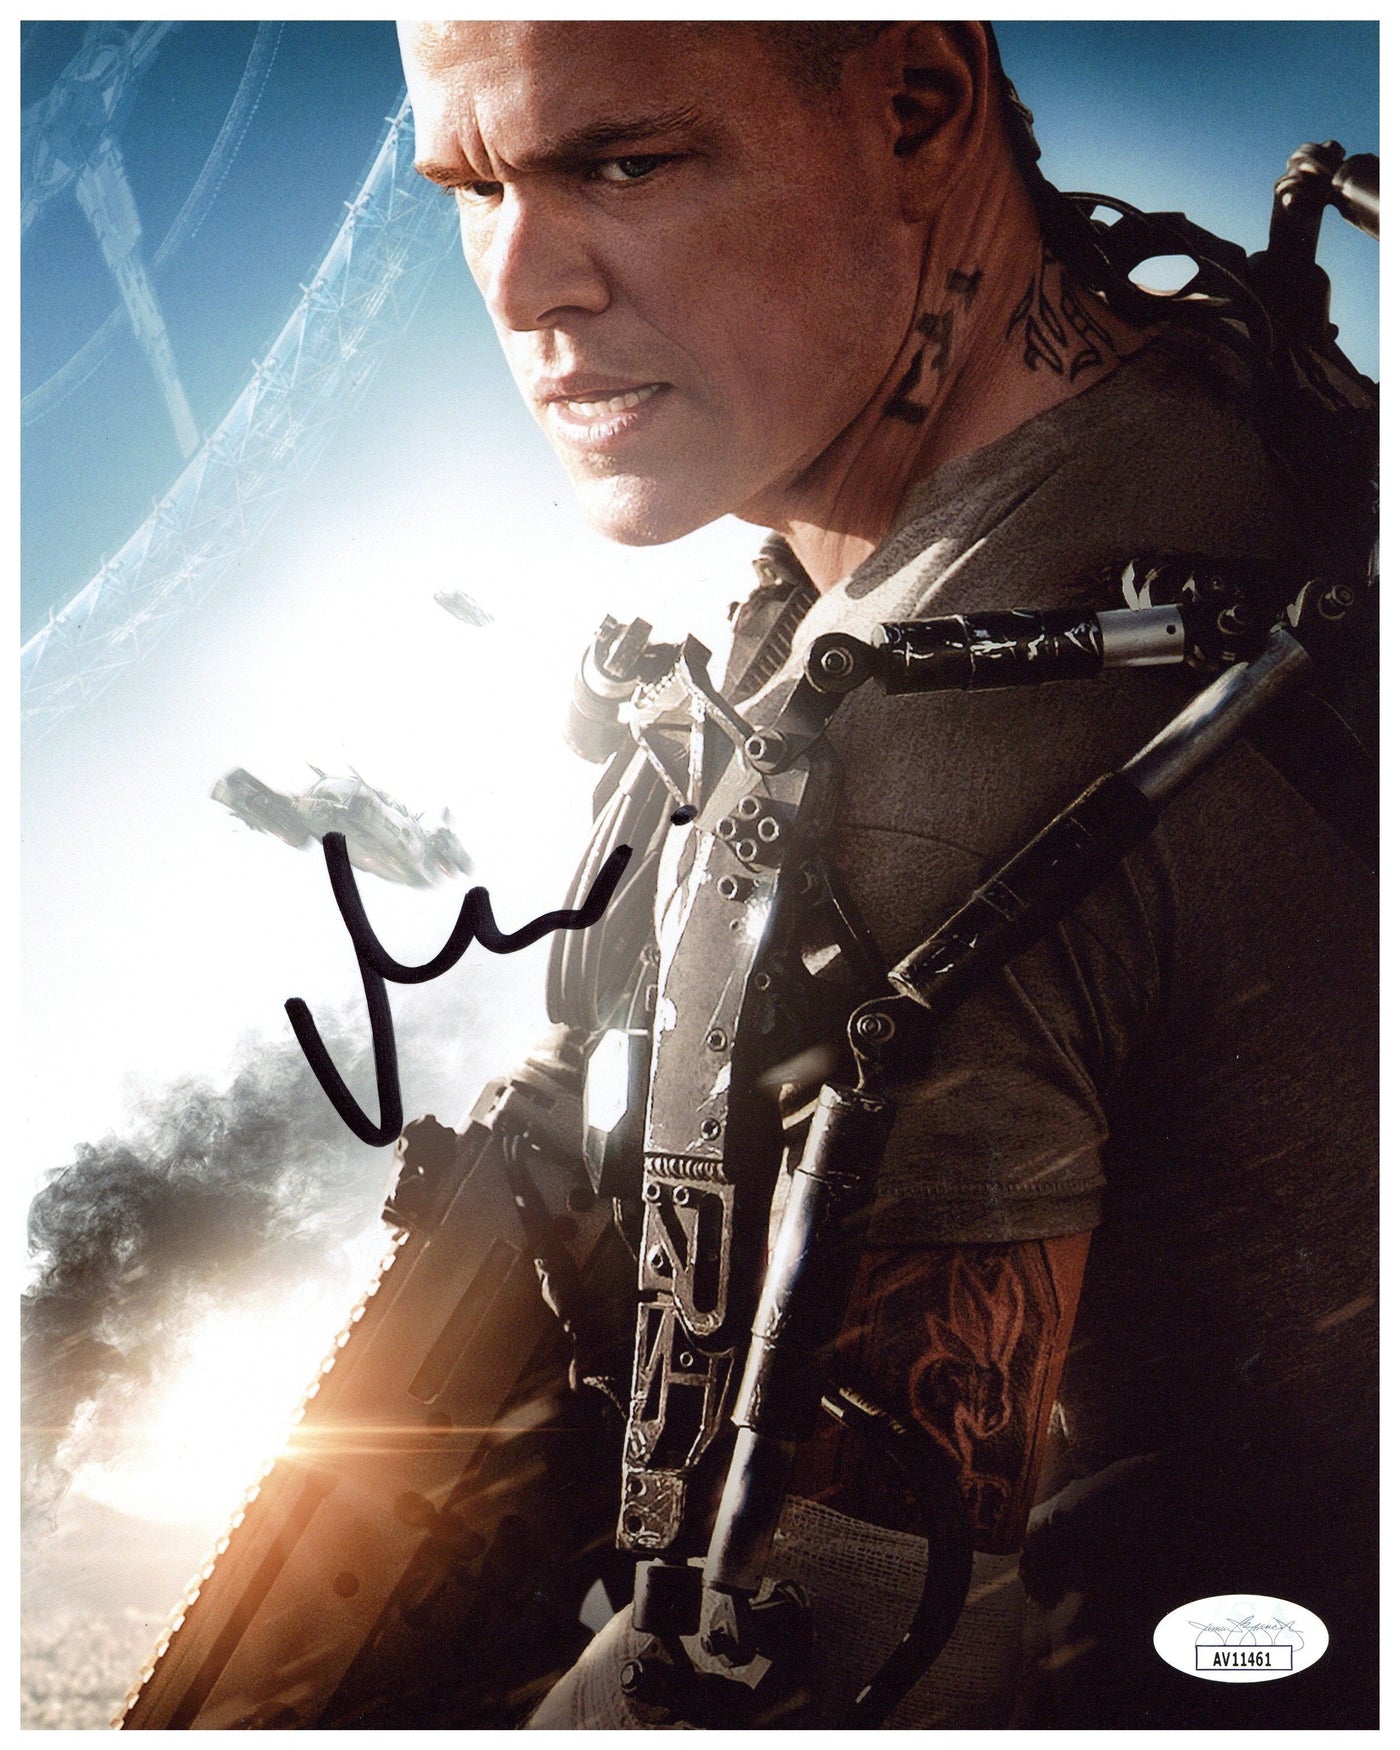 Matt Damon Signed 8x10 Photo Elysium Autographed Authentic JSA COA